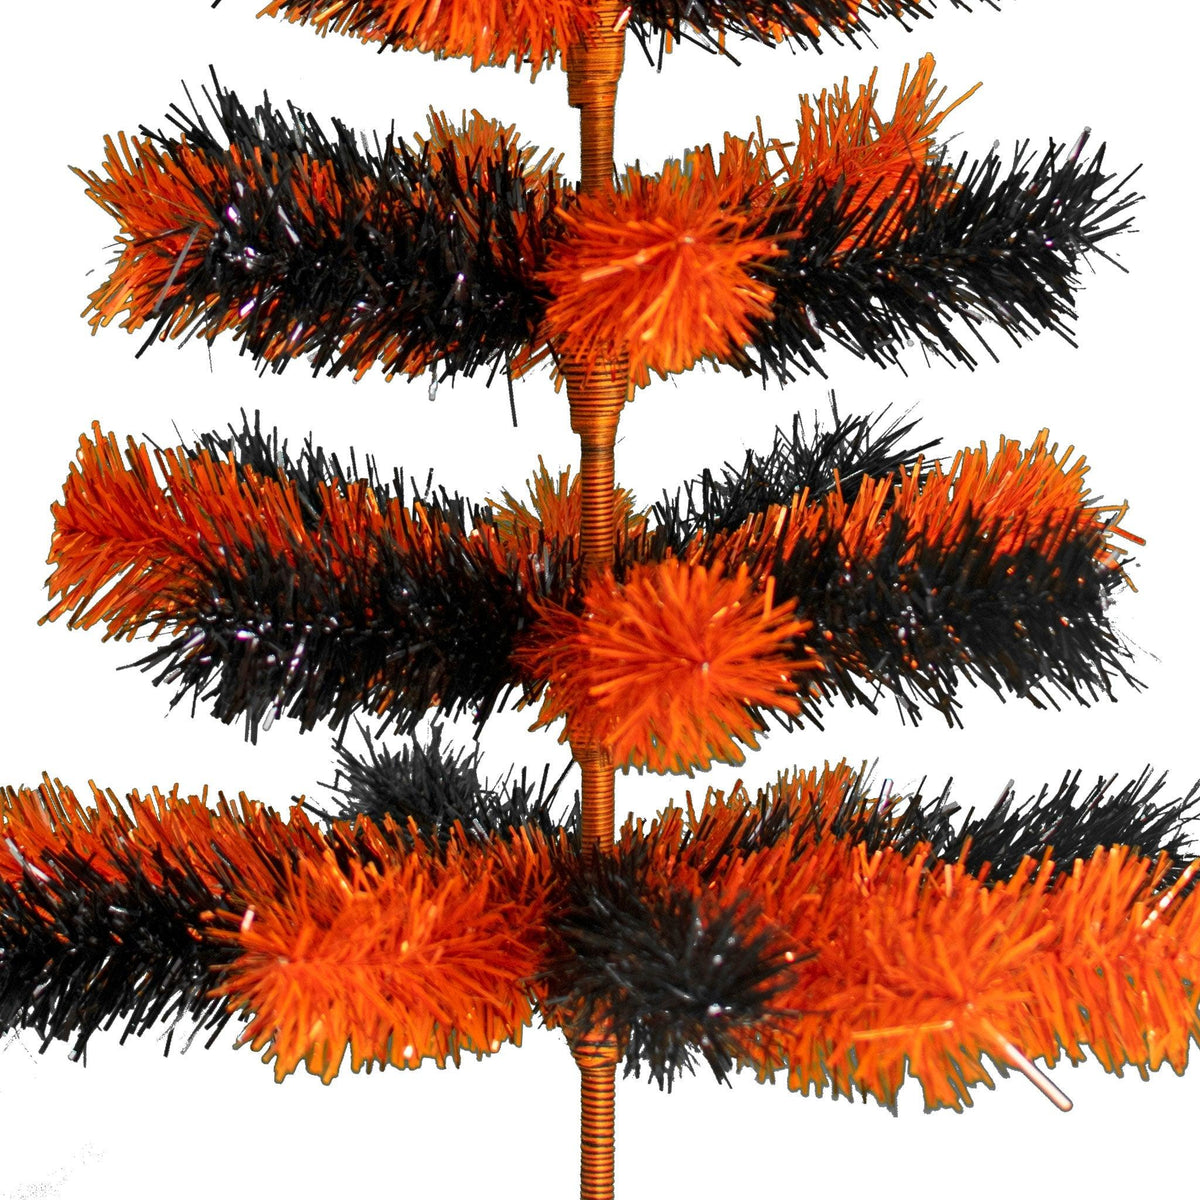 Introducing Lee Display's brand new Orange and Black Halloween Themed Christmas Trees on sale at leedisplay.com